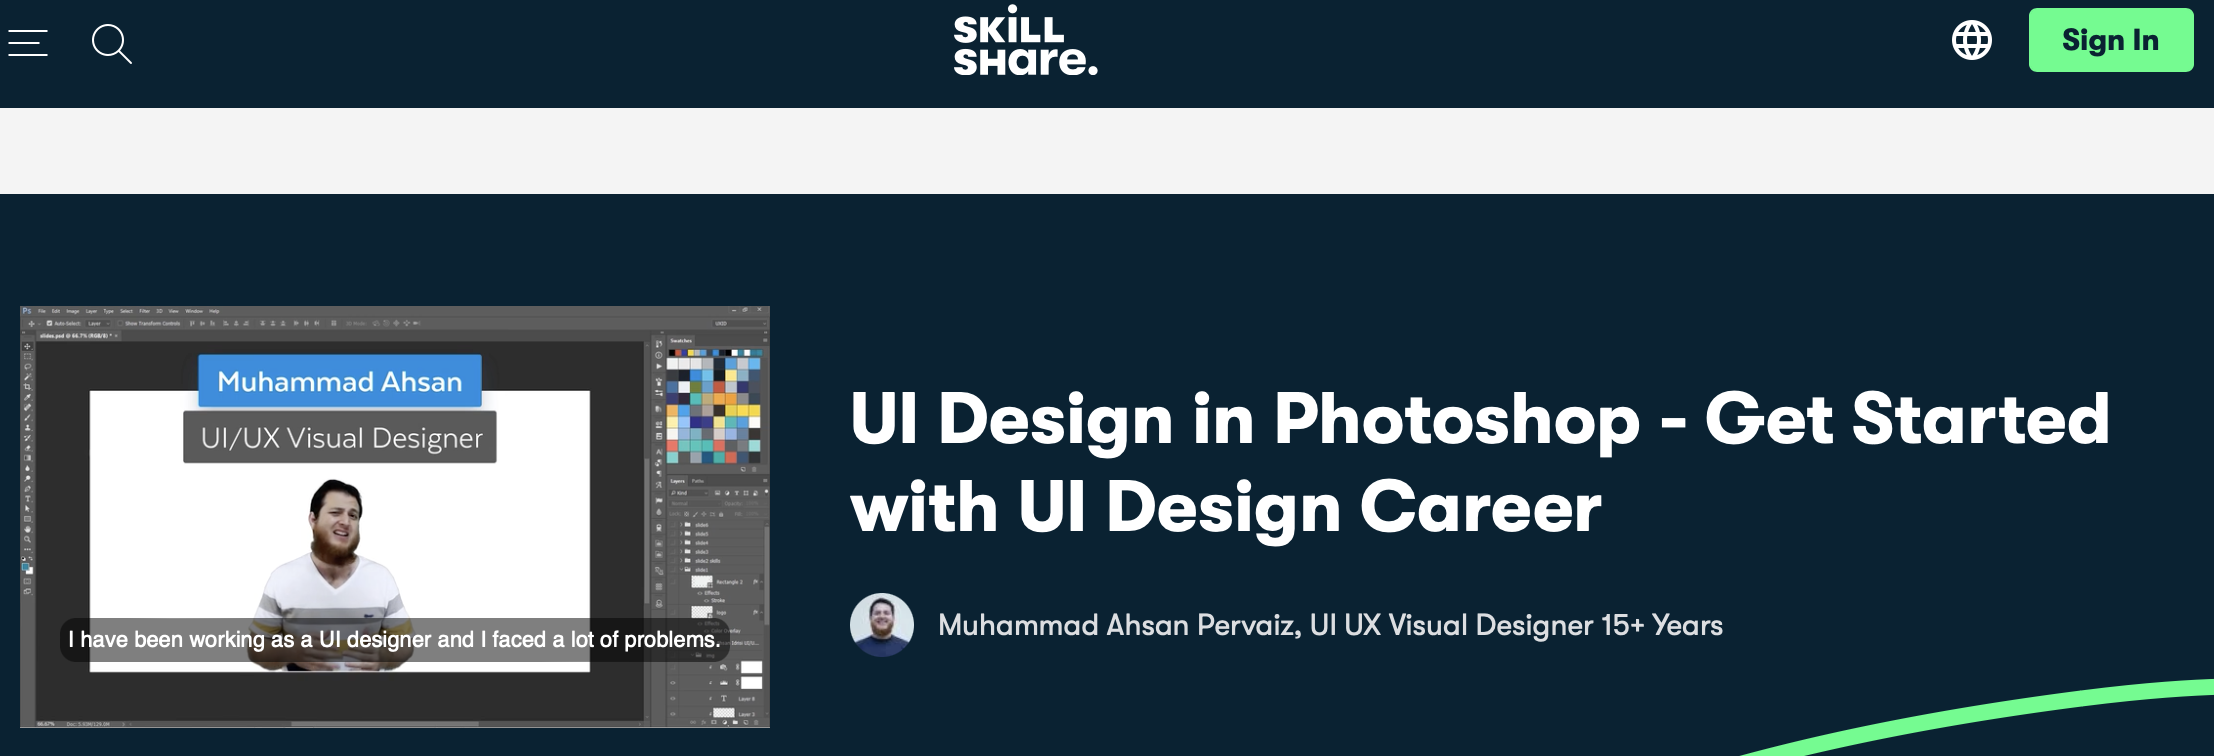 UI Design in Photoshop Get Started with UI Design Career